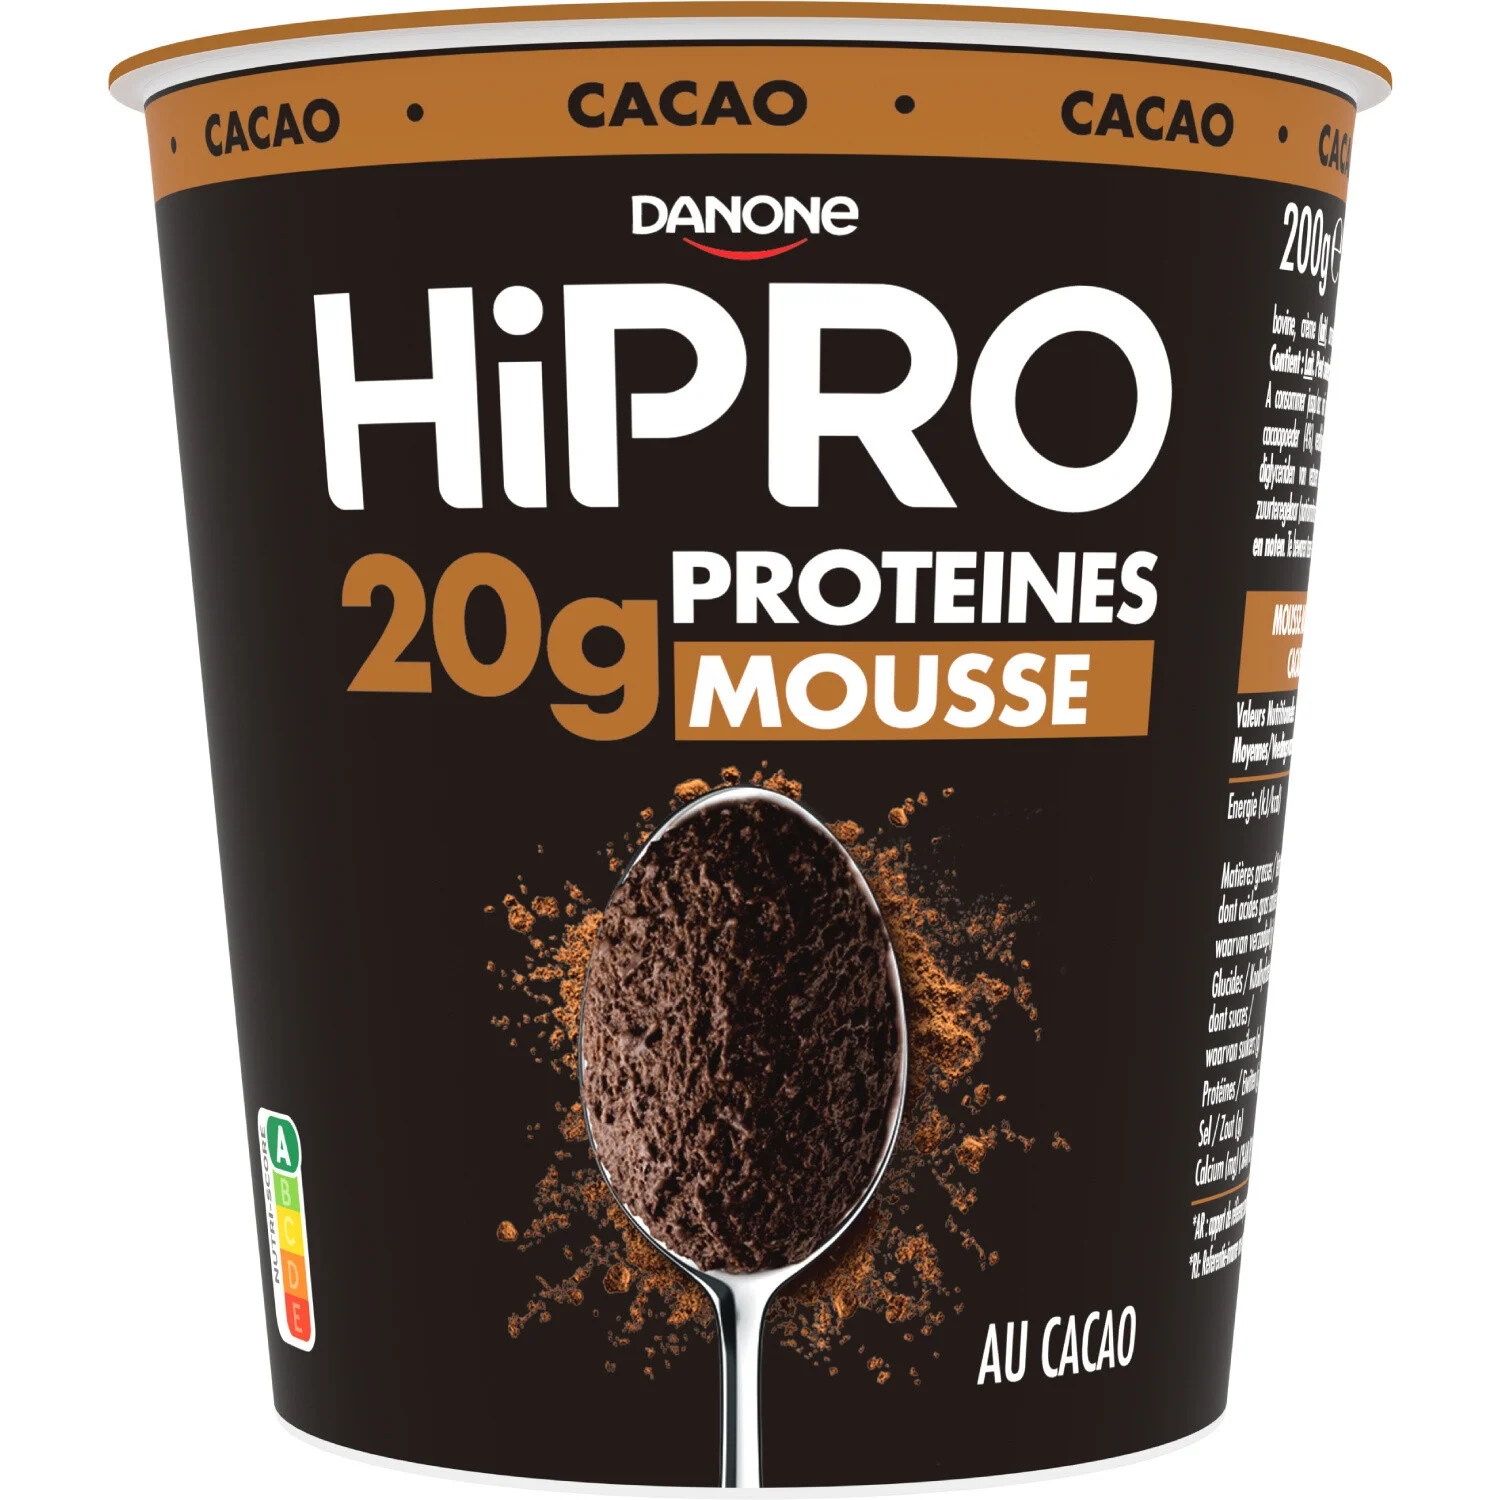 1 Hipro Mousse